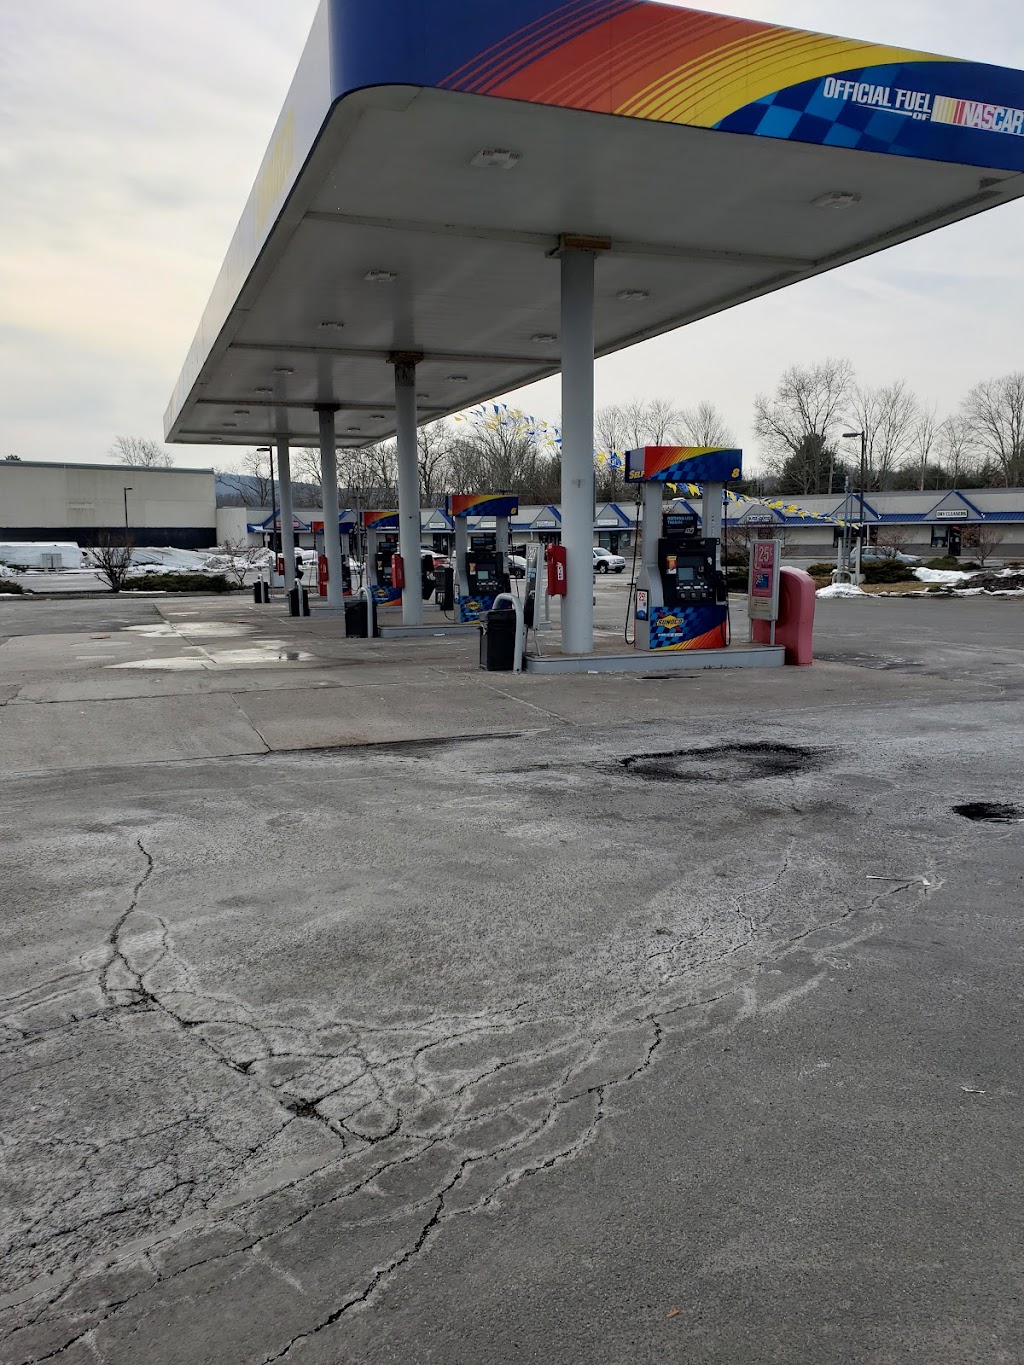 Sunoco Gas Station | 5218 Milford Rd E, East Stroudsburg, PA 18302 | Phone: (570) 588-3800